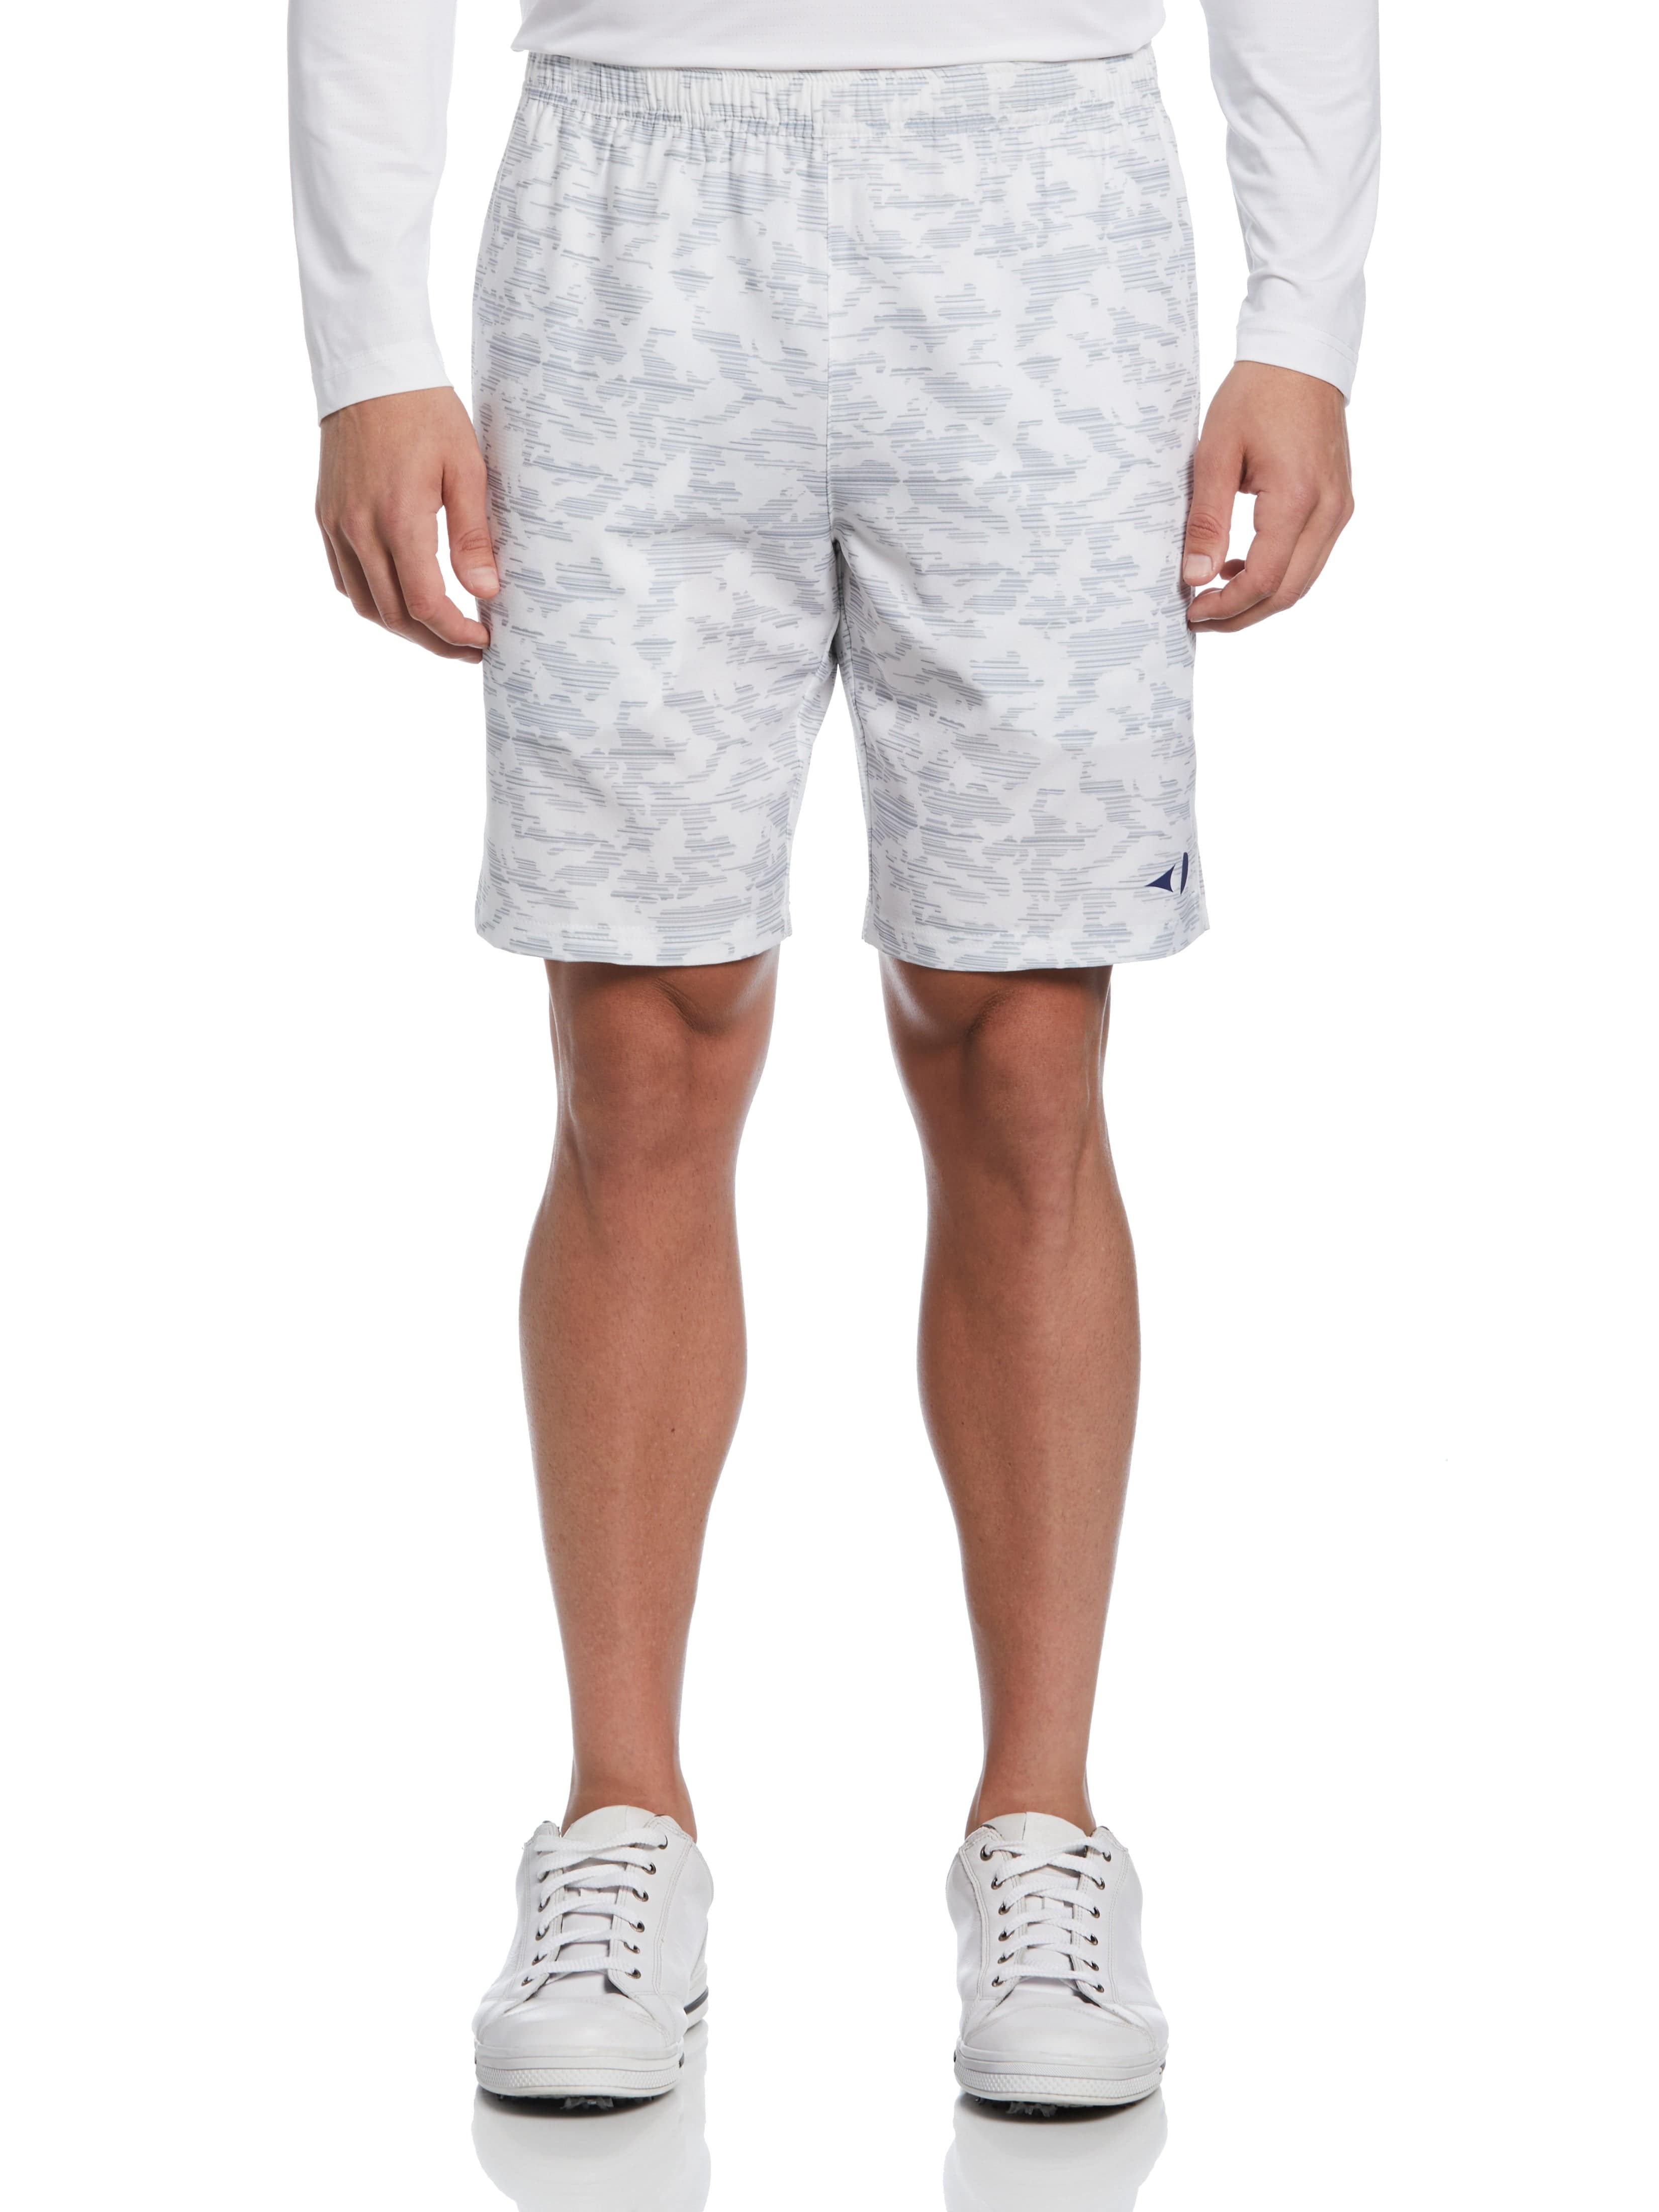 Grand Slam Mens Camo Printed Tennis Short, Size Large, White, Polyester/Elastane | Golf Apparel Shop